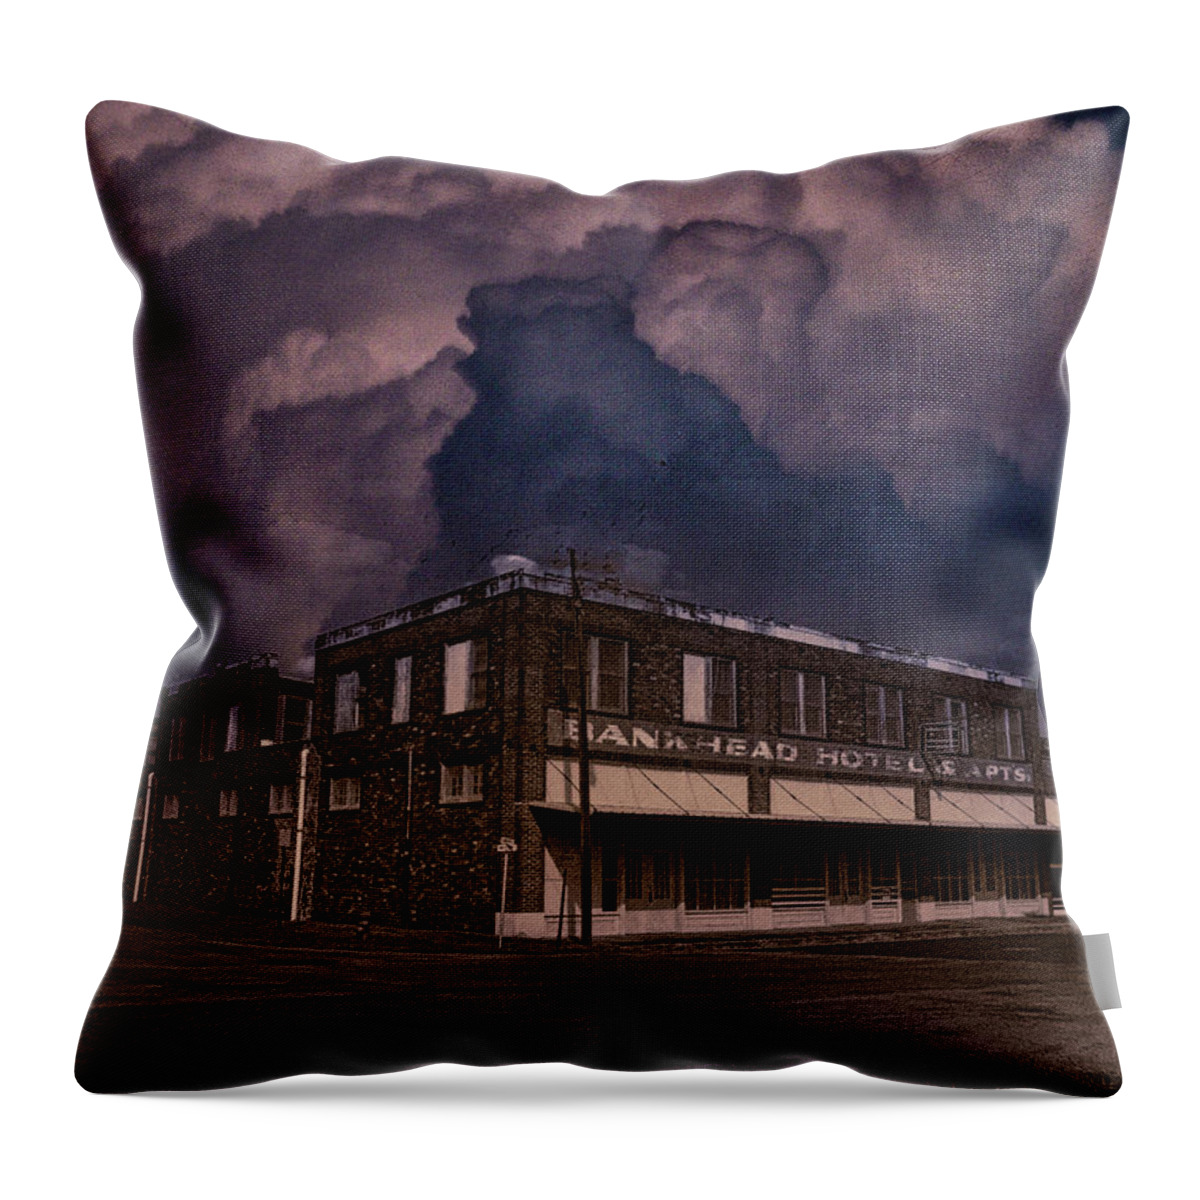 House Throw Pillow featuring the digital art Bank Head Motel Circa 1950 by Rene Vasquez